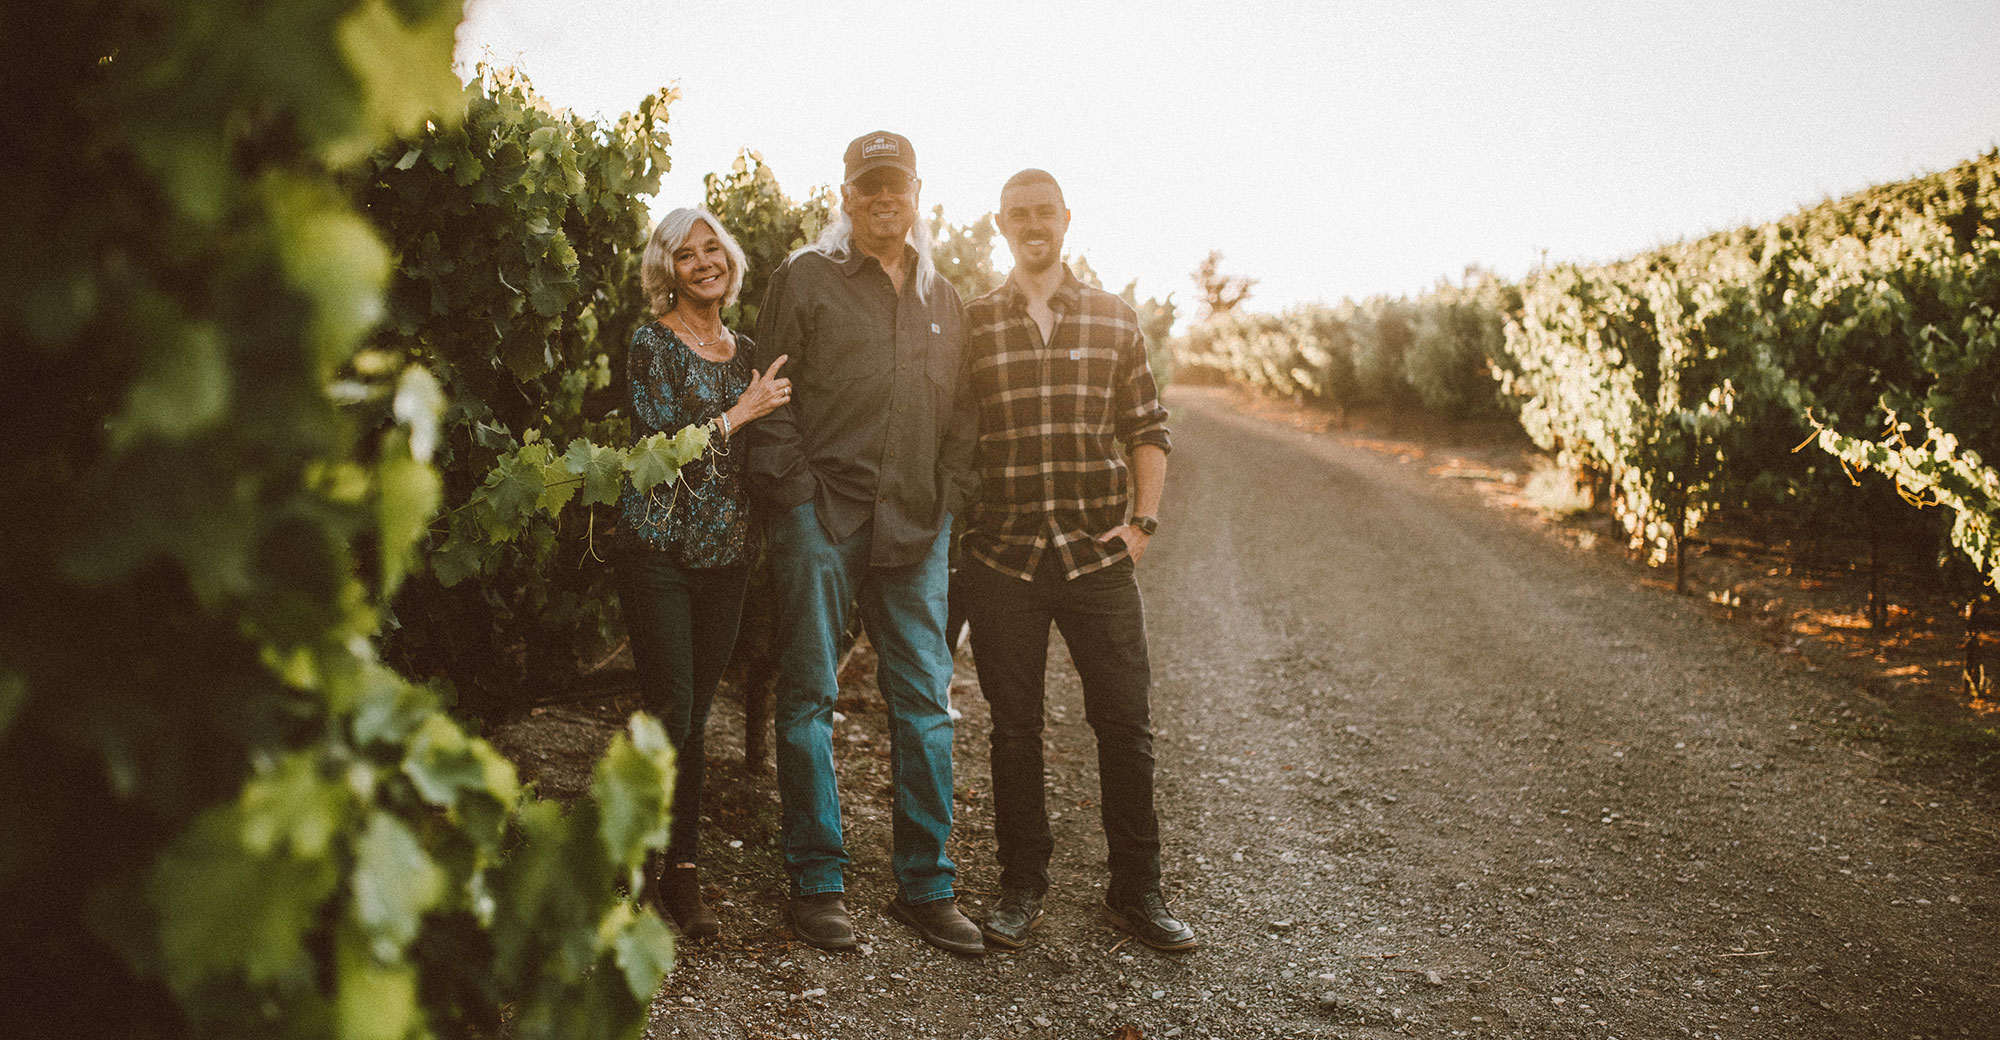 Carhartt Family in Vineyard